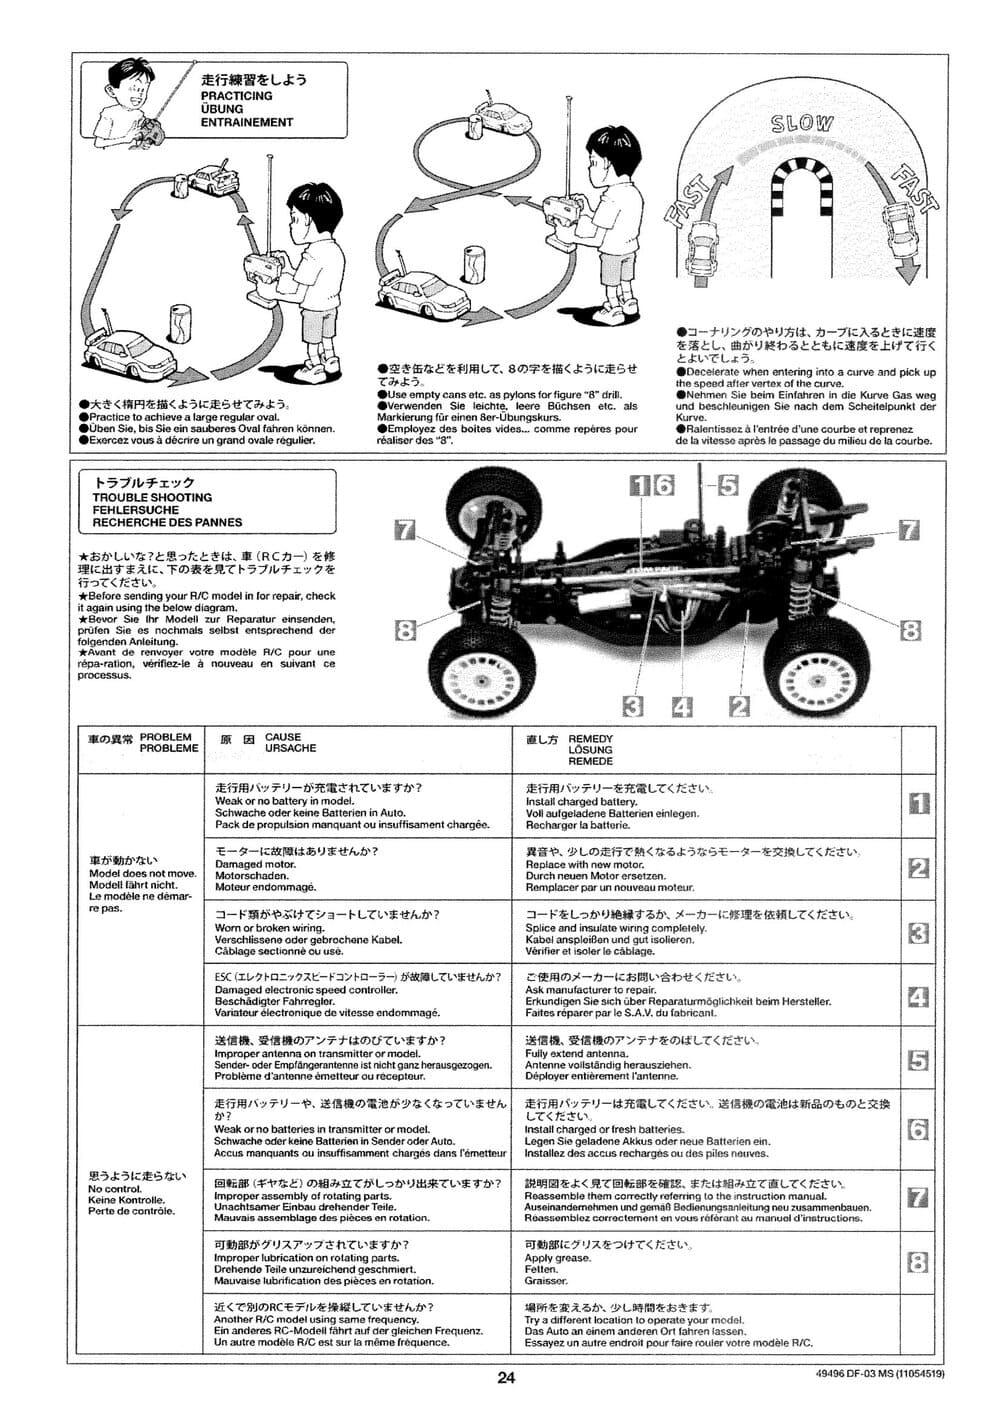 Tamiya - DF-03 MS Chassis Chassis - Manual - Page 24